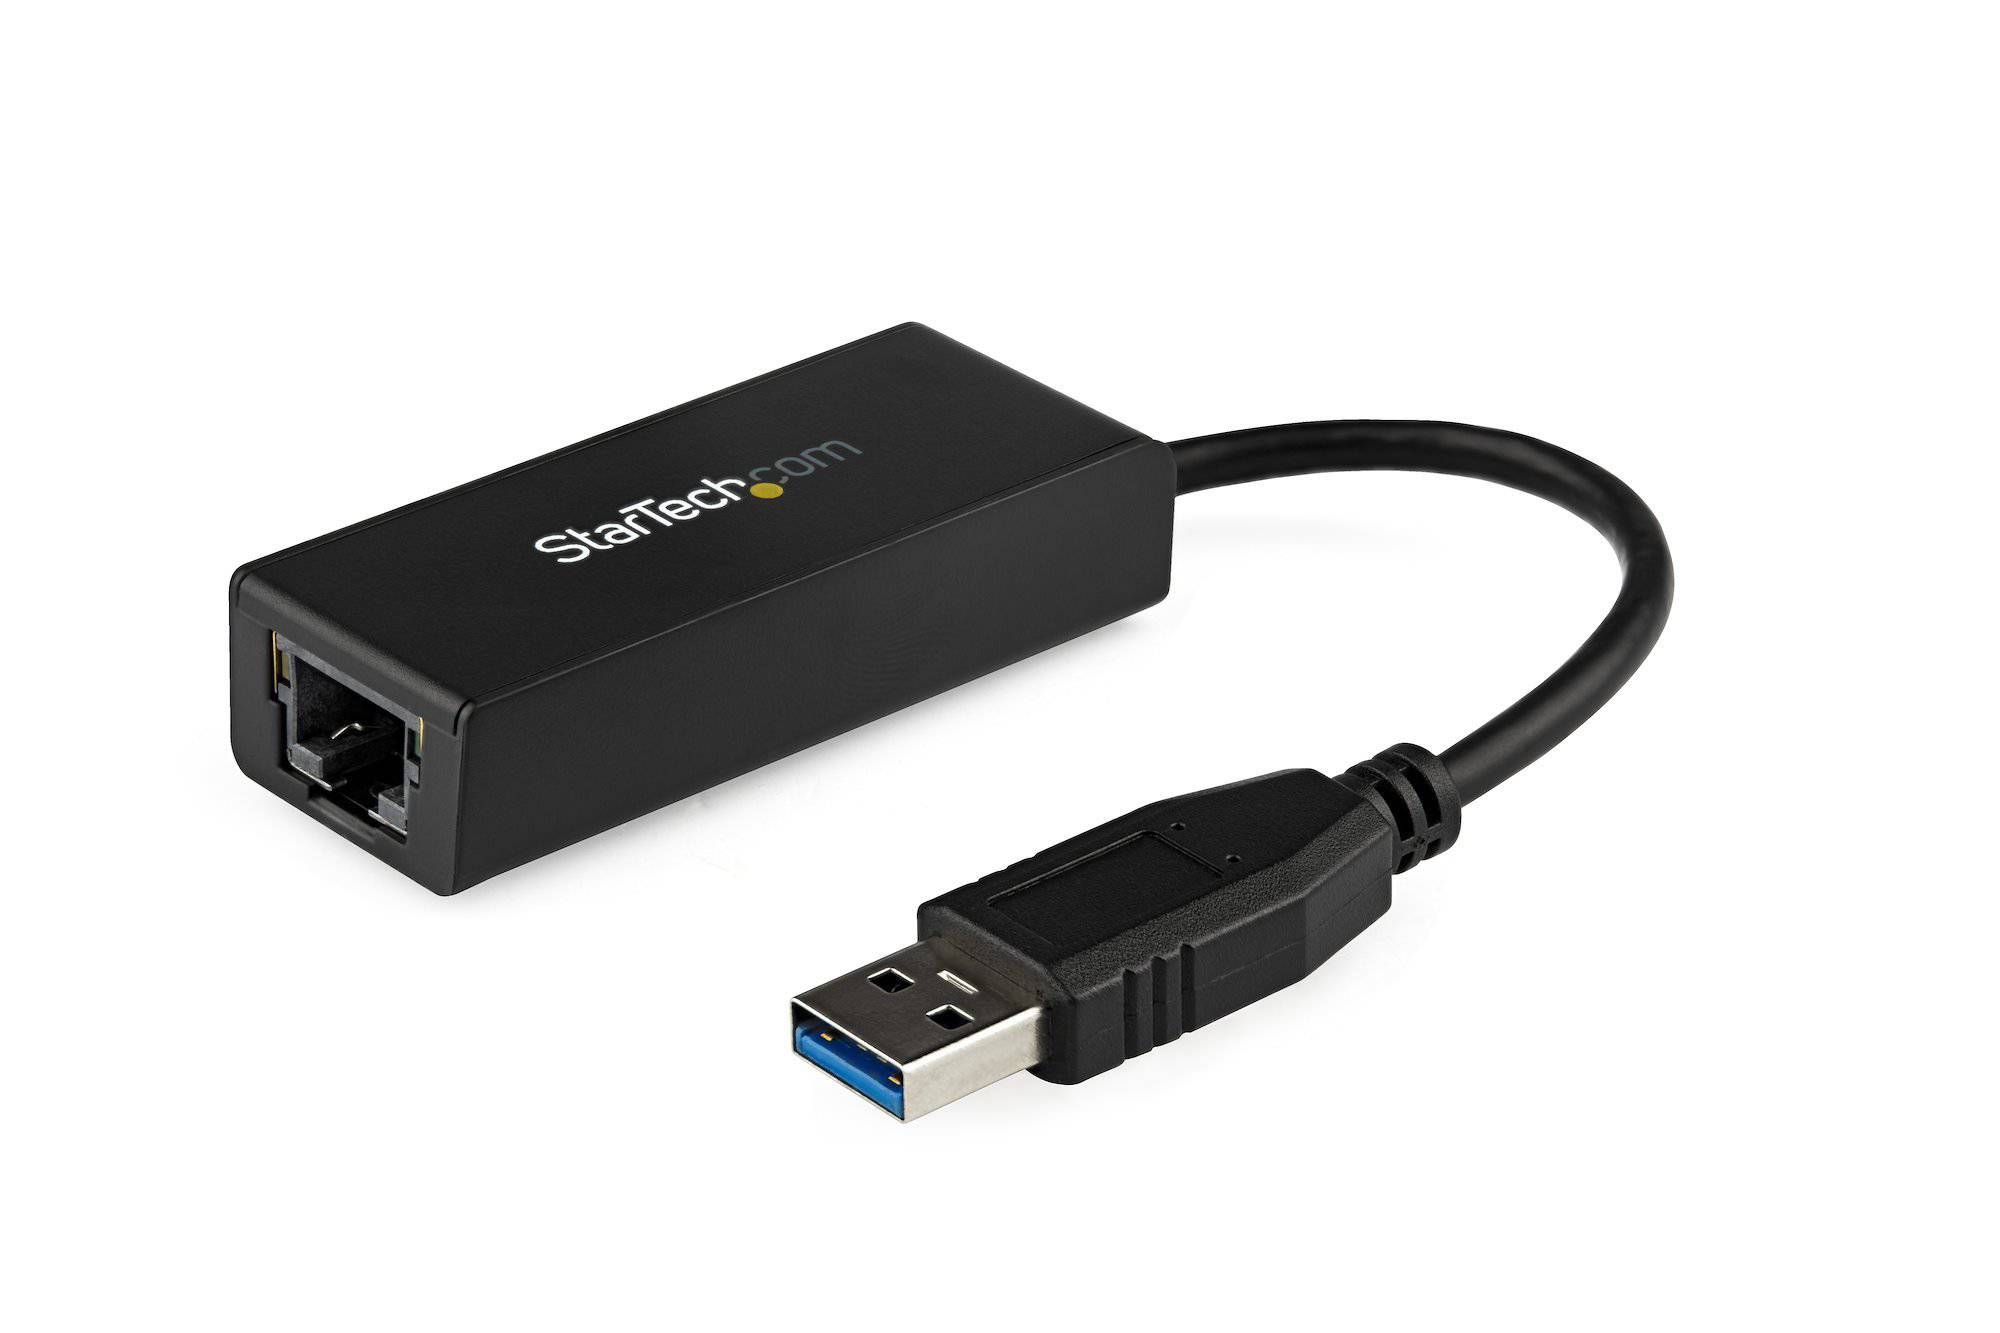 Startech USB 3.0 to Gigabit Ethernet NIC Network Adapter USB31000S (Black) (2 years Local Warranty) - Buy Singapore